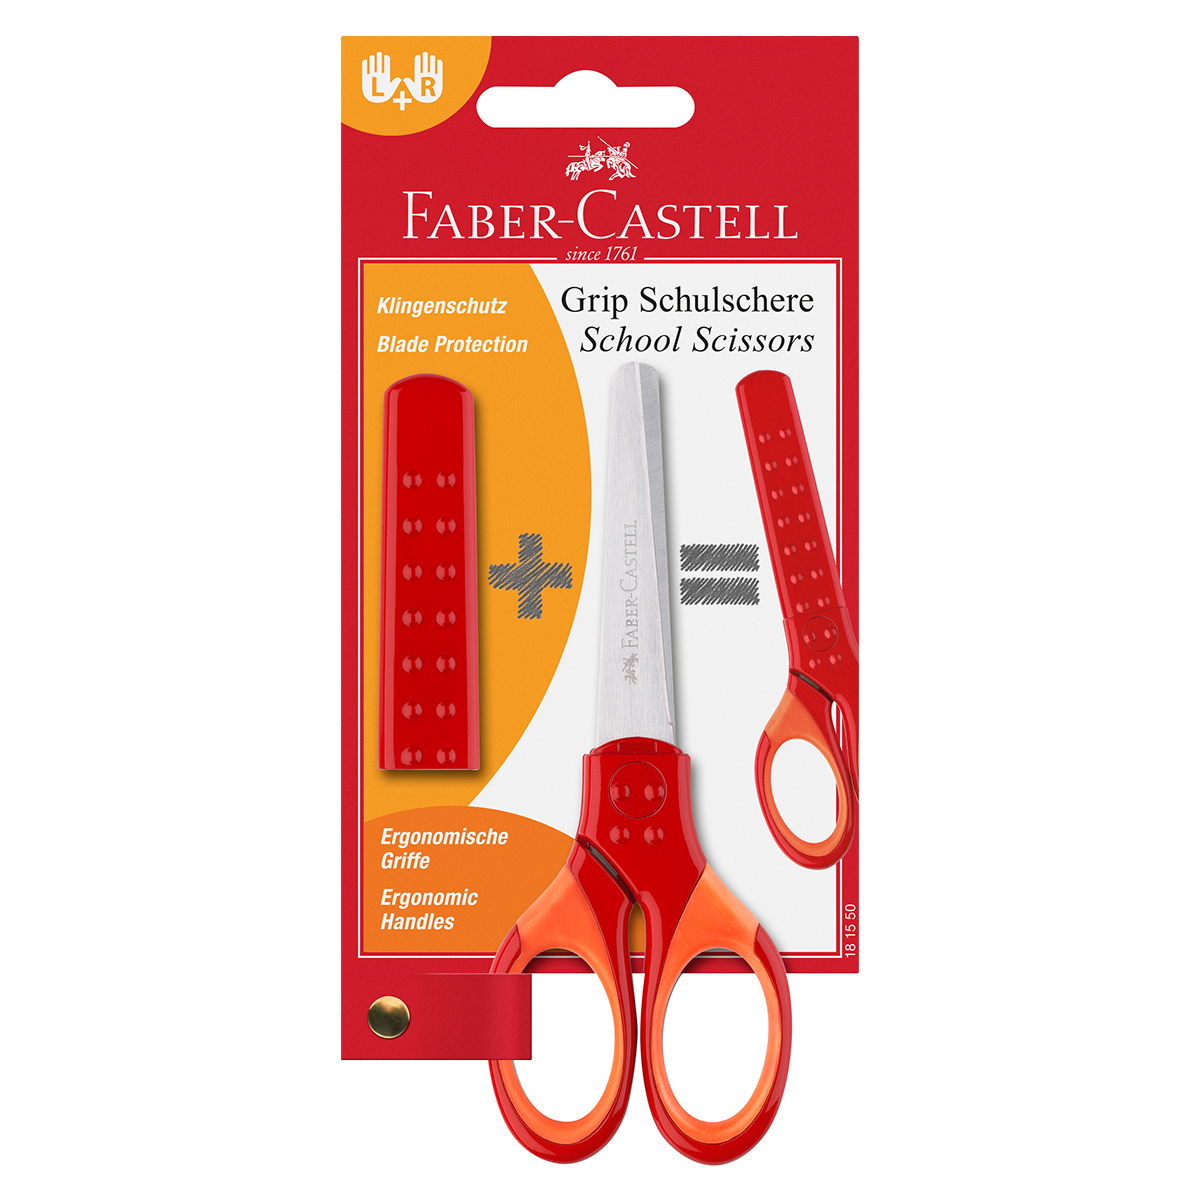 Scissors | Little Creatives | Faber-Castell